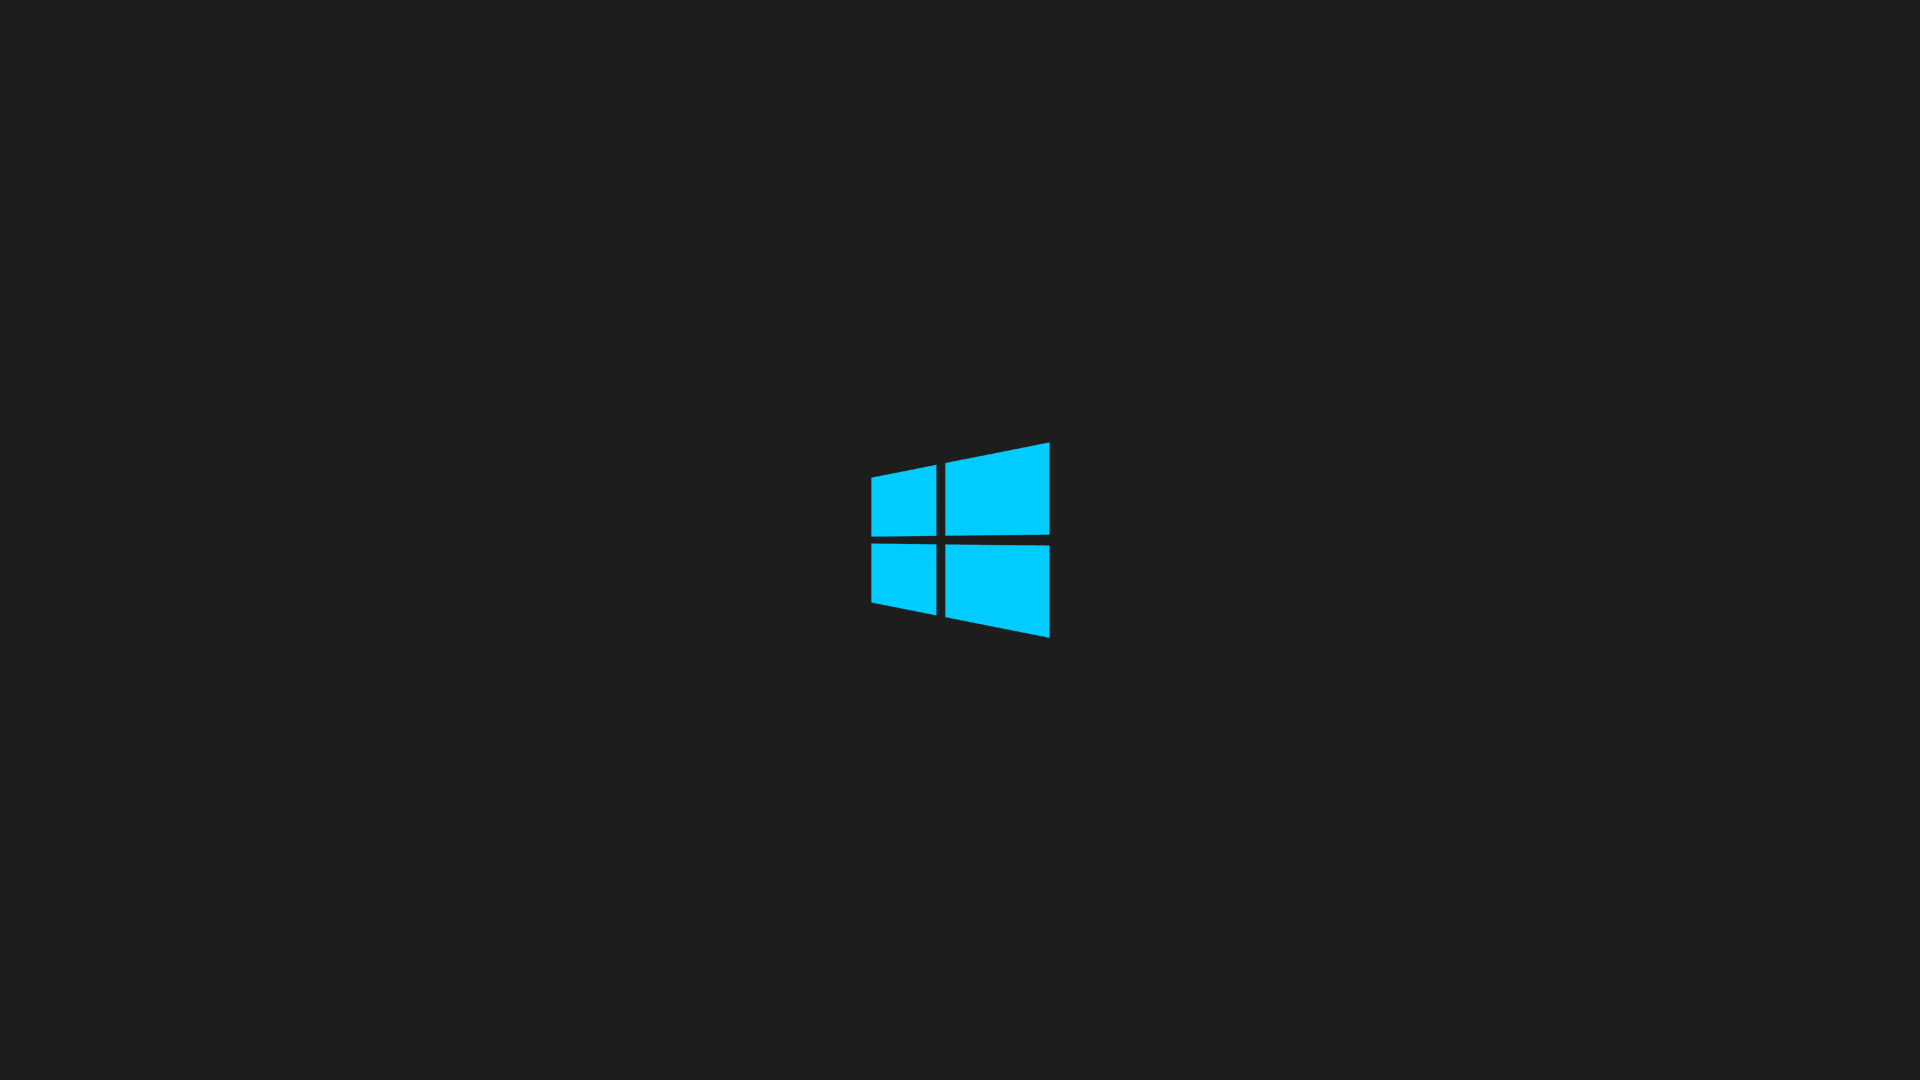  Microsoft Hintergrundbild 1920x1080. Black Windows 8 Wallpaper. Top HD Wallpaper. Windows wallpaper, Samsung wallpaper, Dark windows